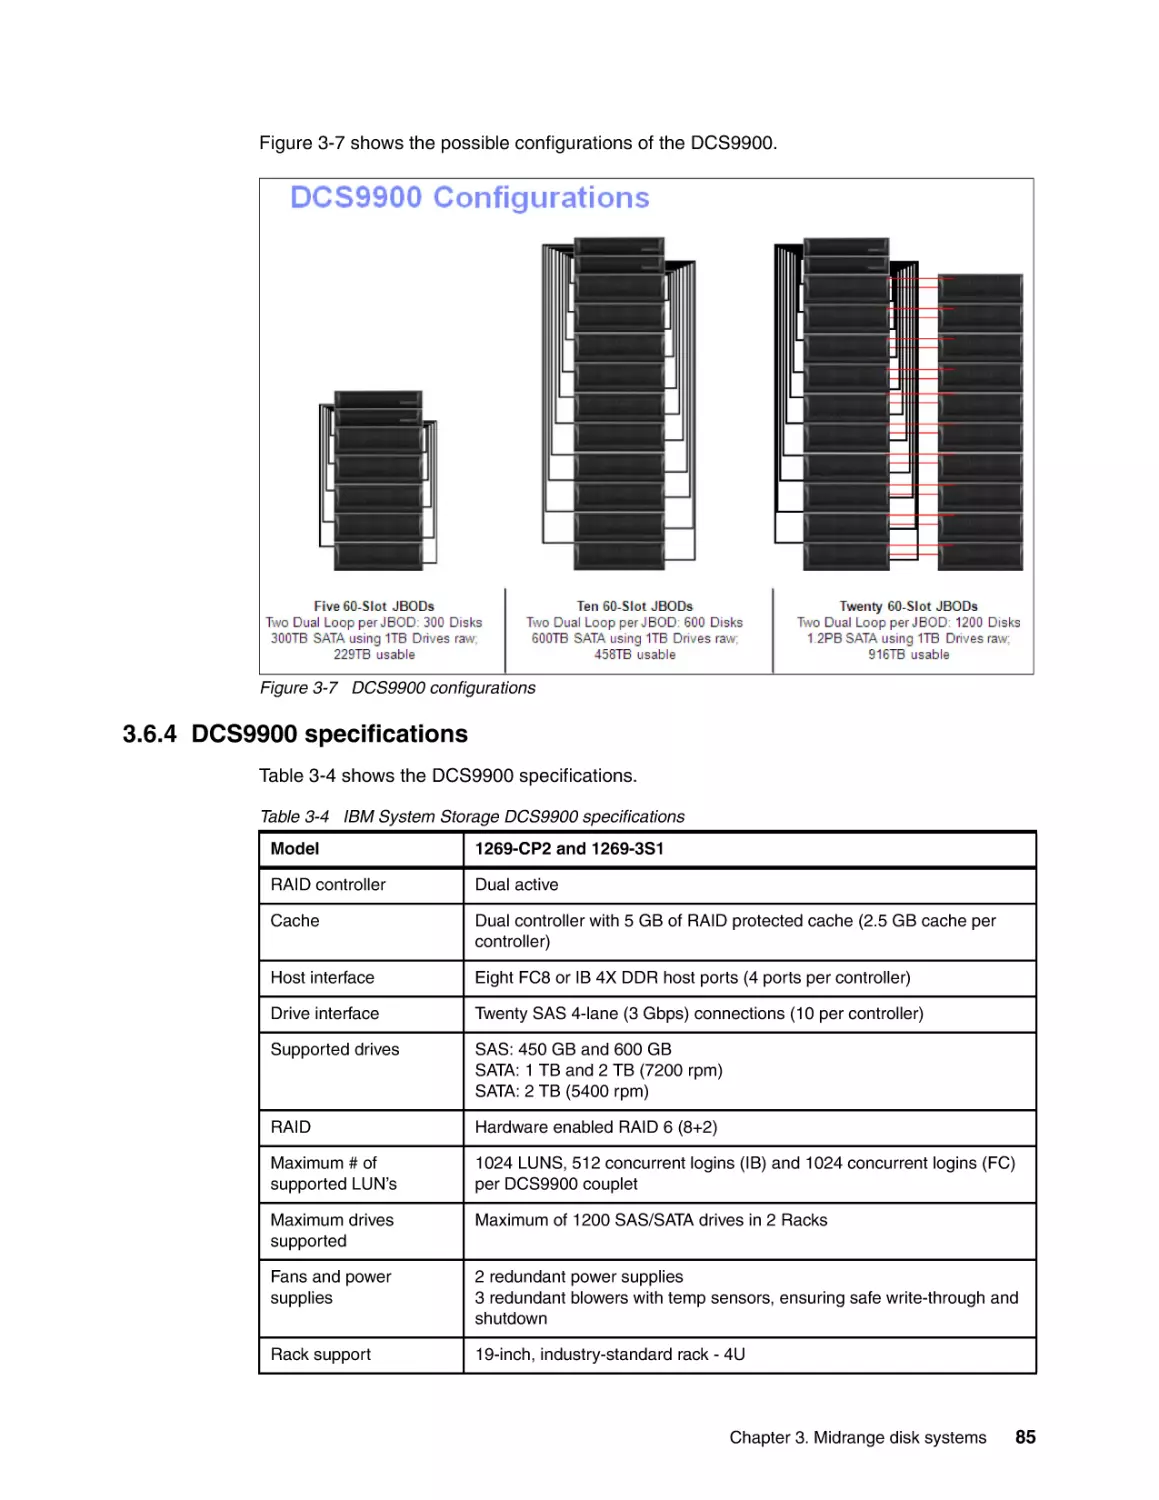 3.6.4 DCS9900 specifications